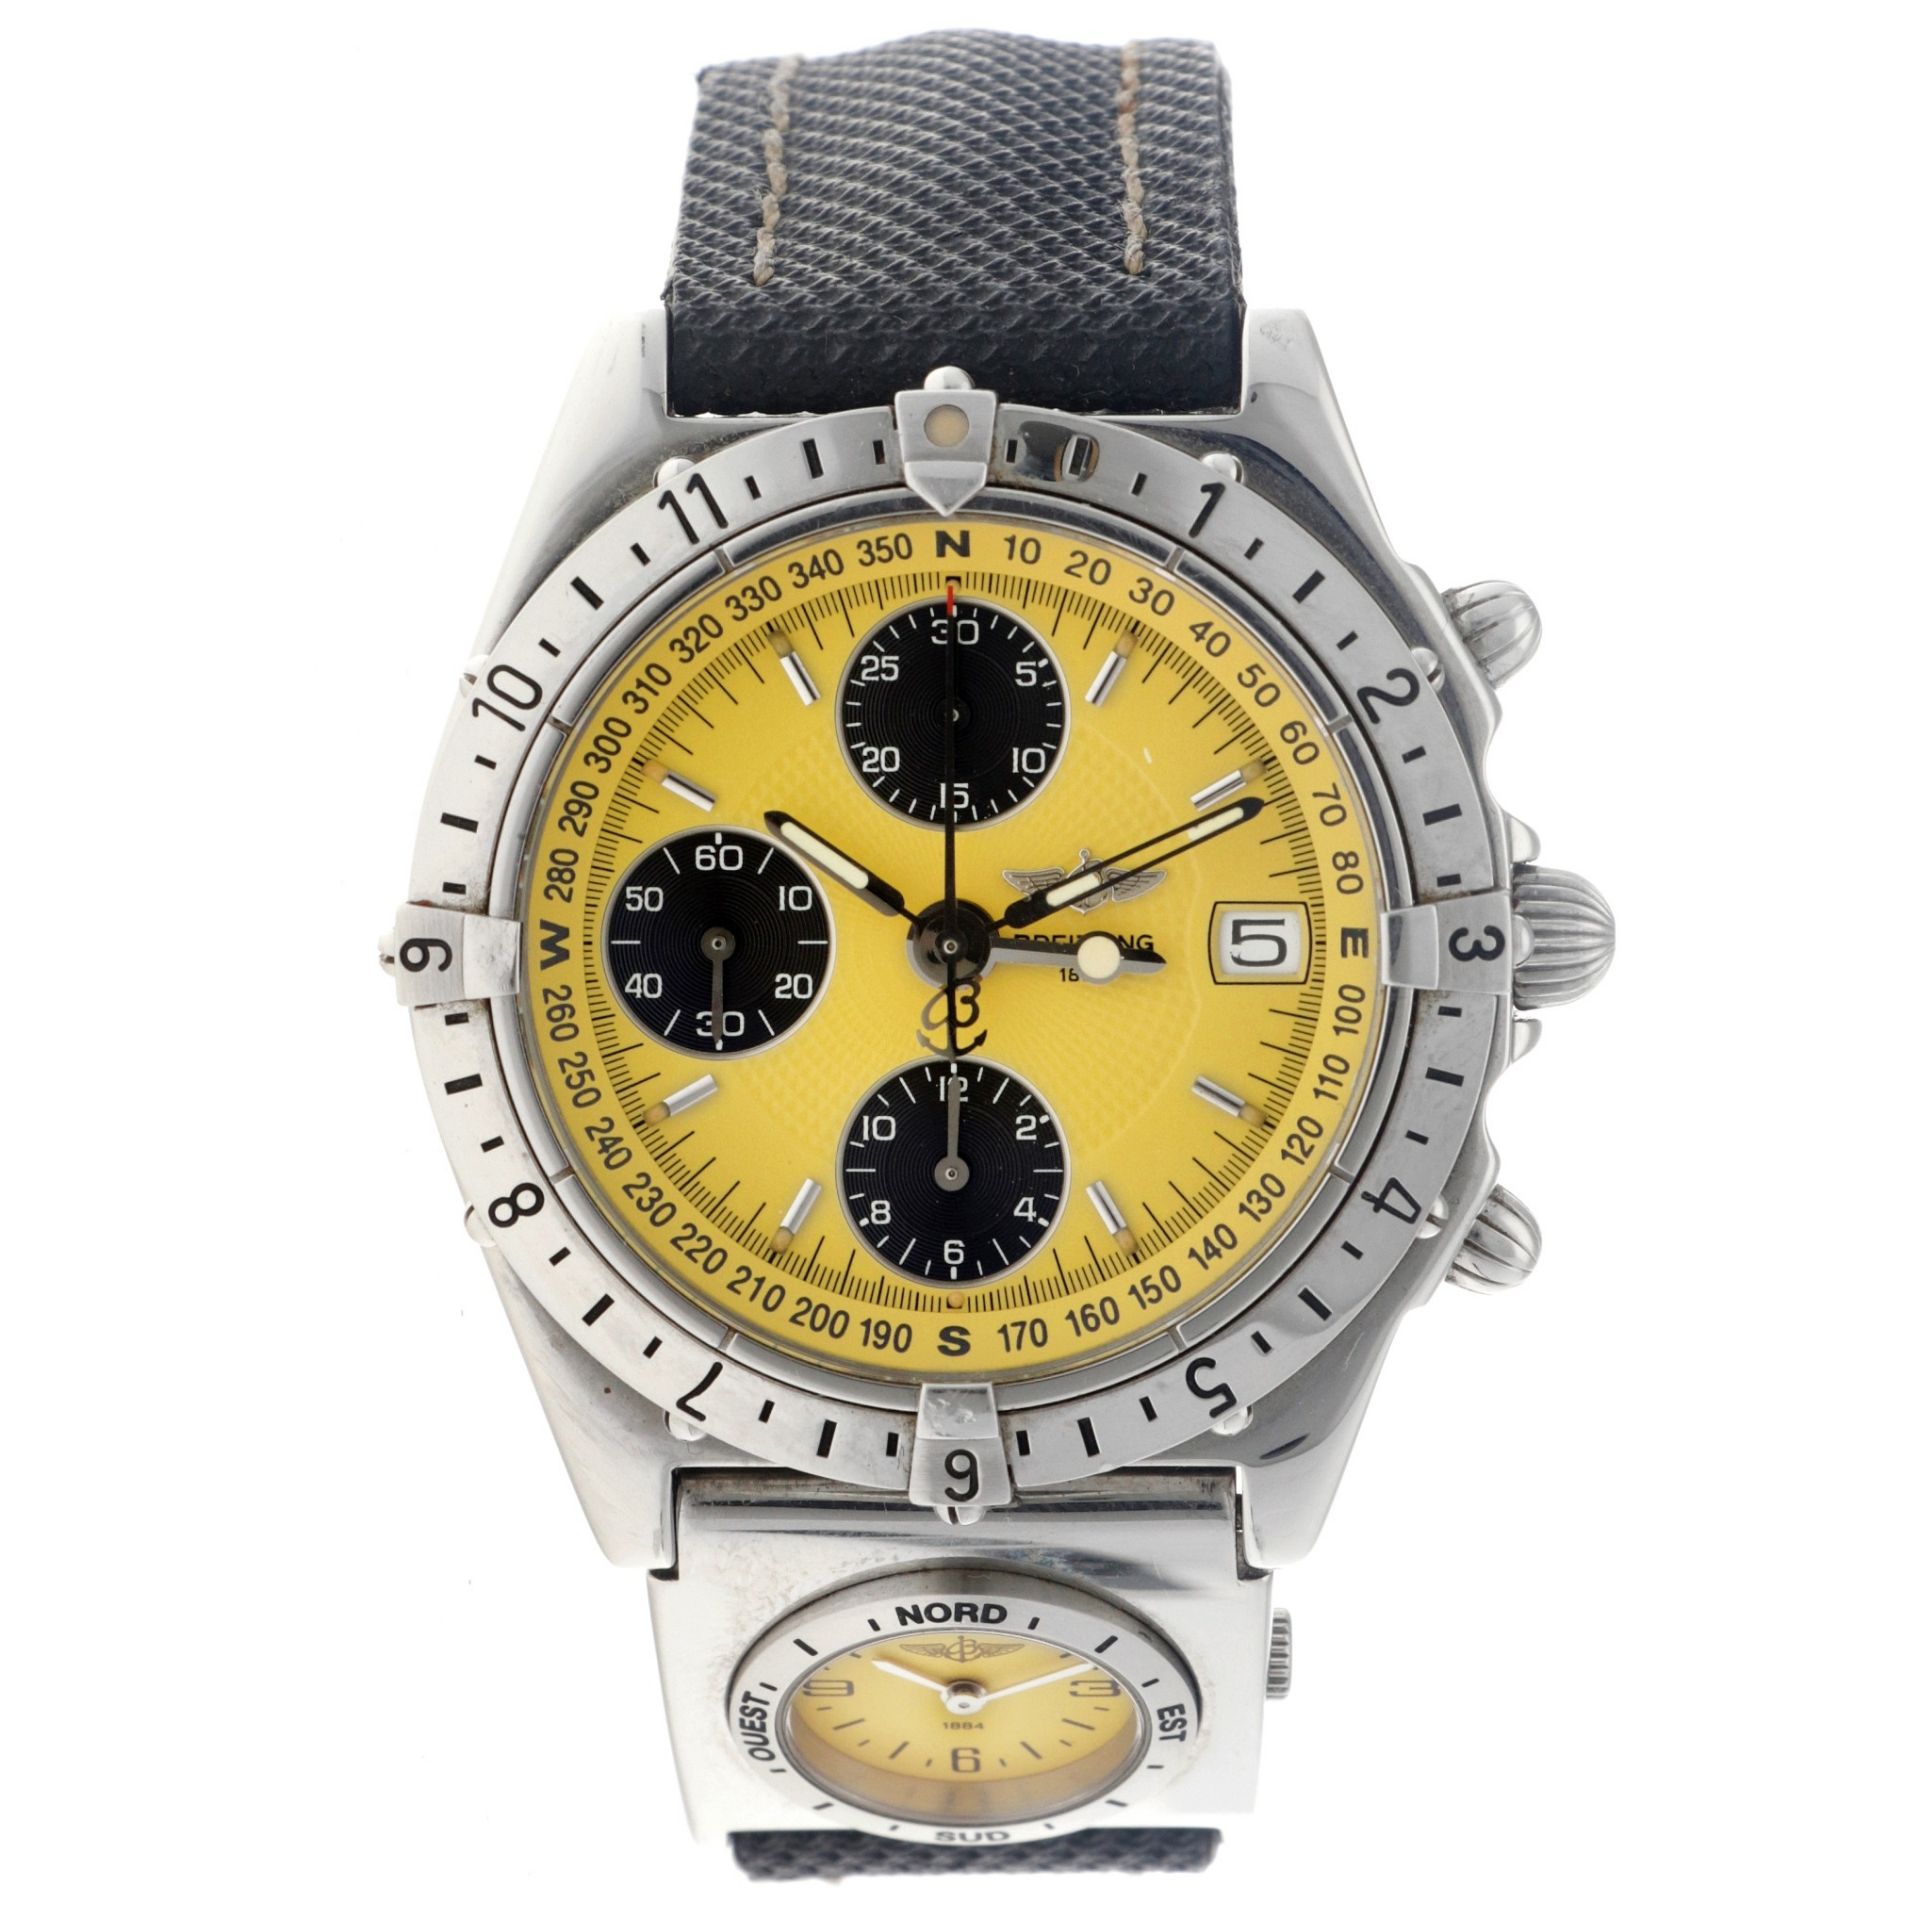 No Reserve - Breitling Chronomat UTC A20048 & A61172 - Men's watch.